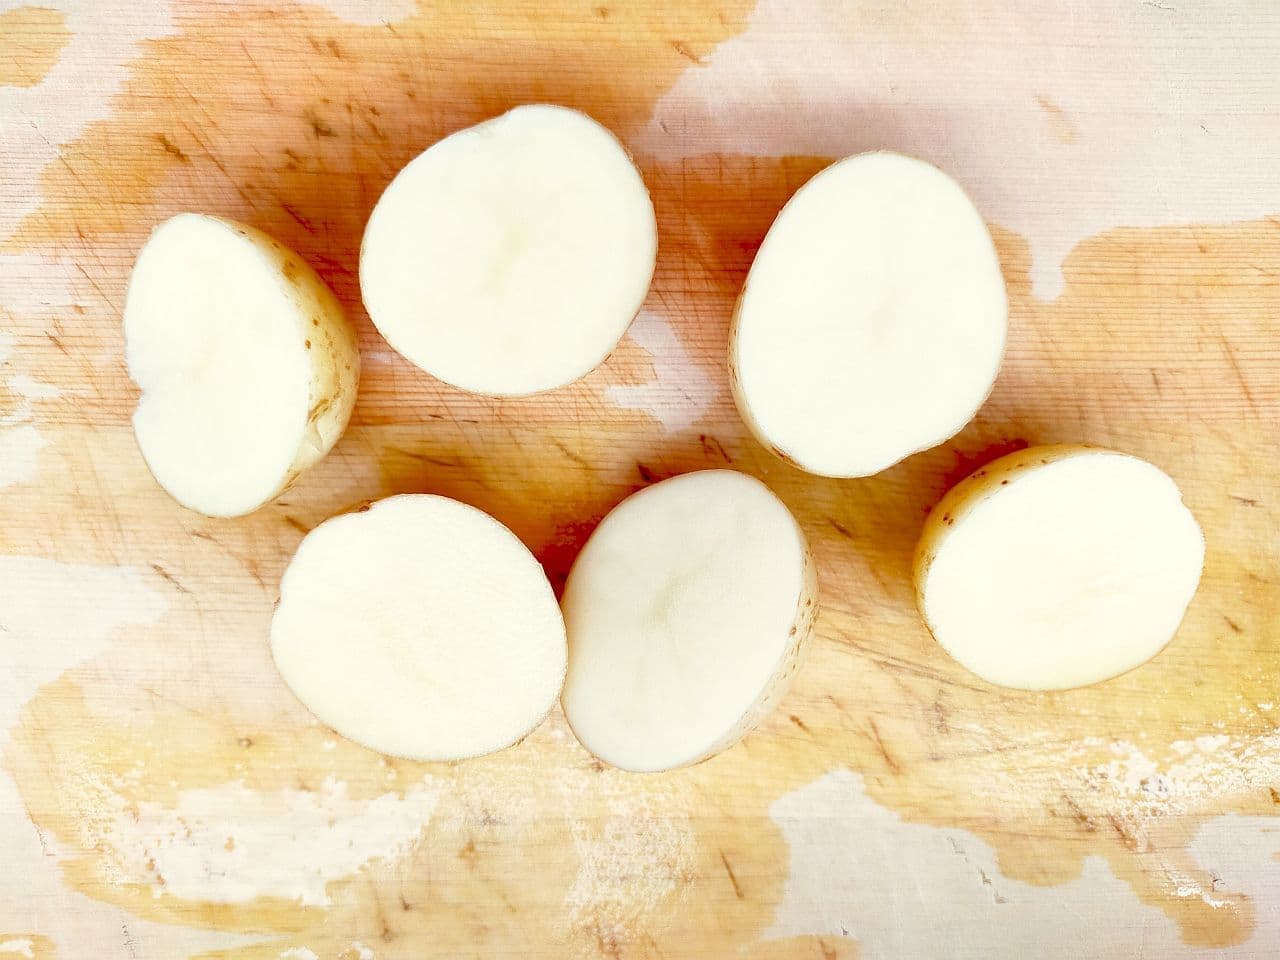 "New potato mitarashi butter" recipe